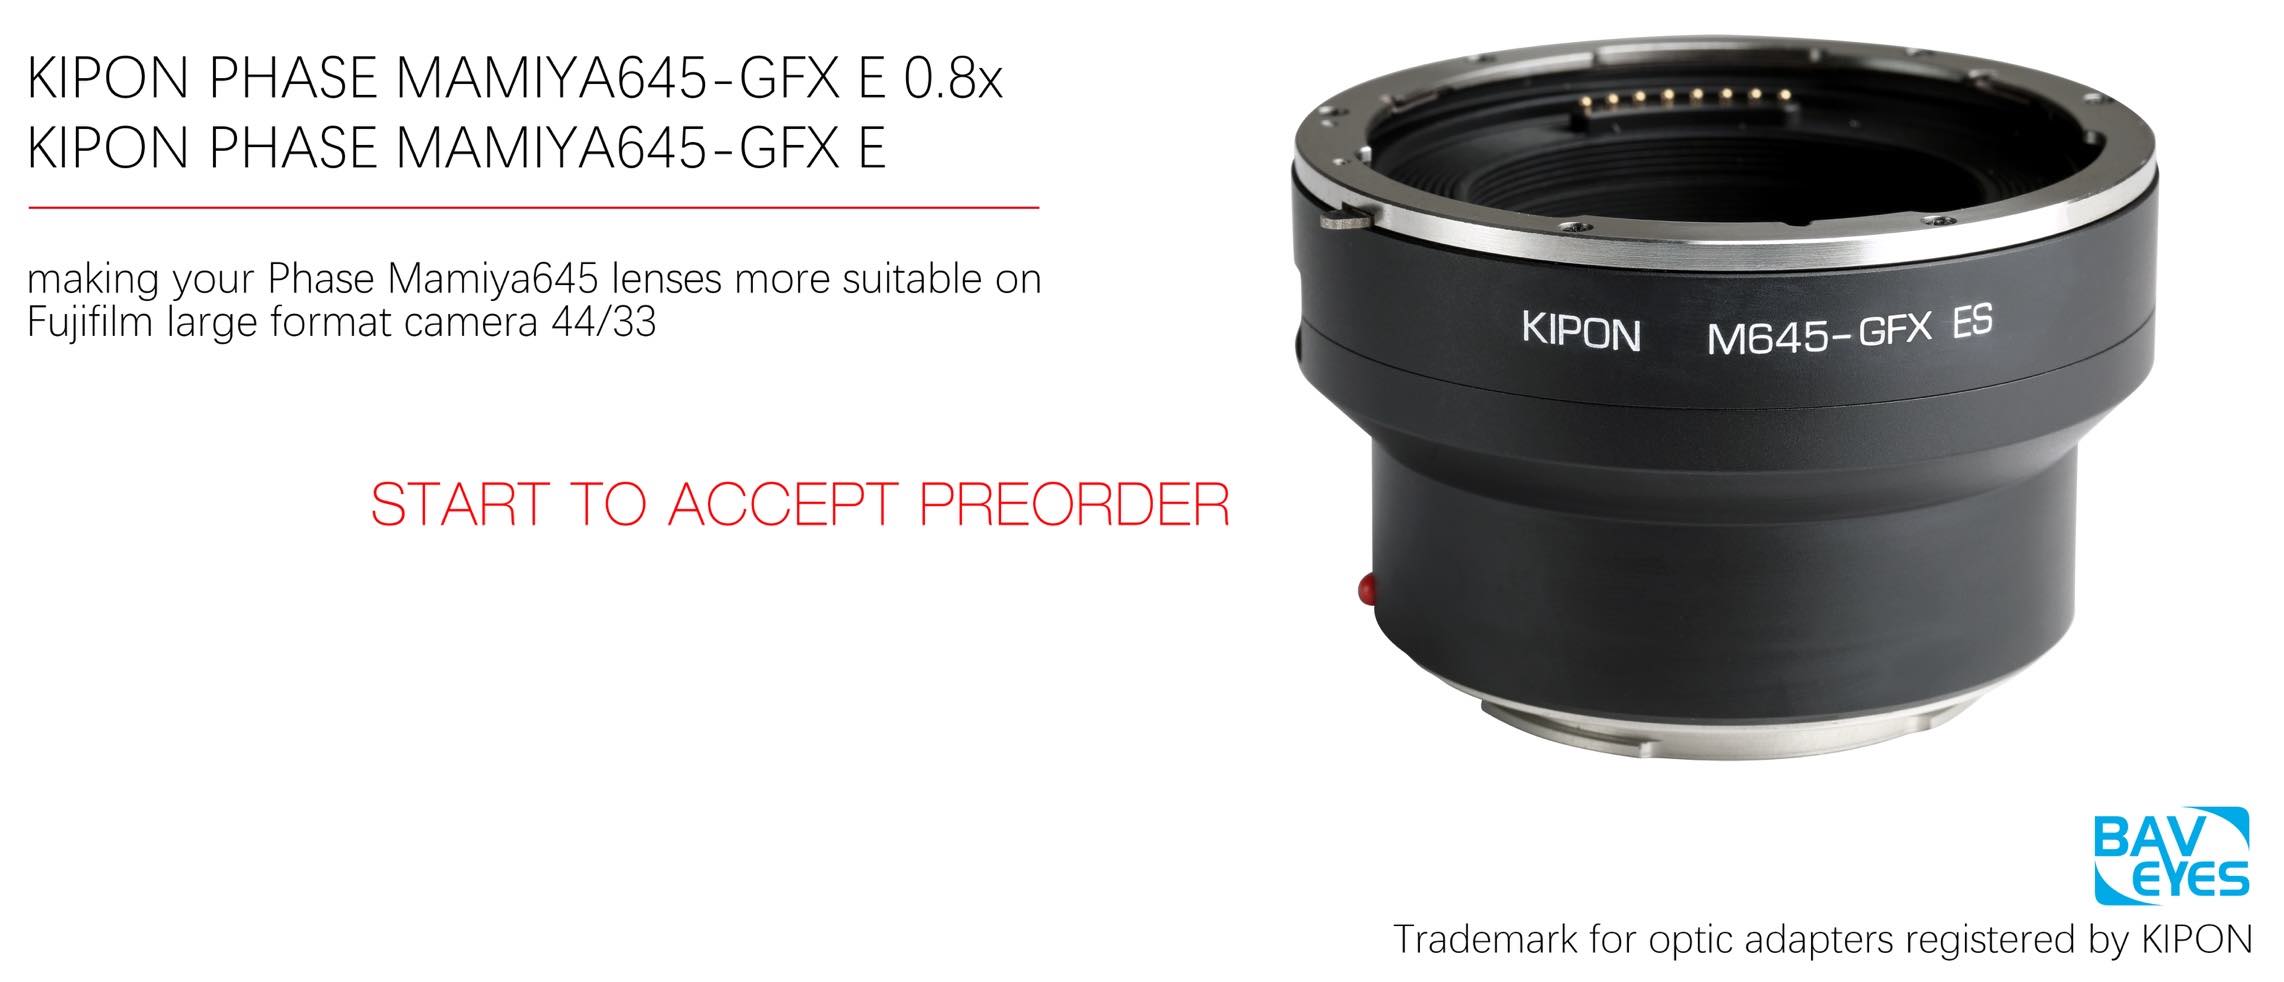 KIPON Starts to Accept Preorder for M645-GFX Autofocus Adapter